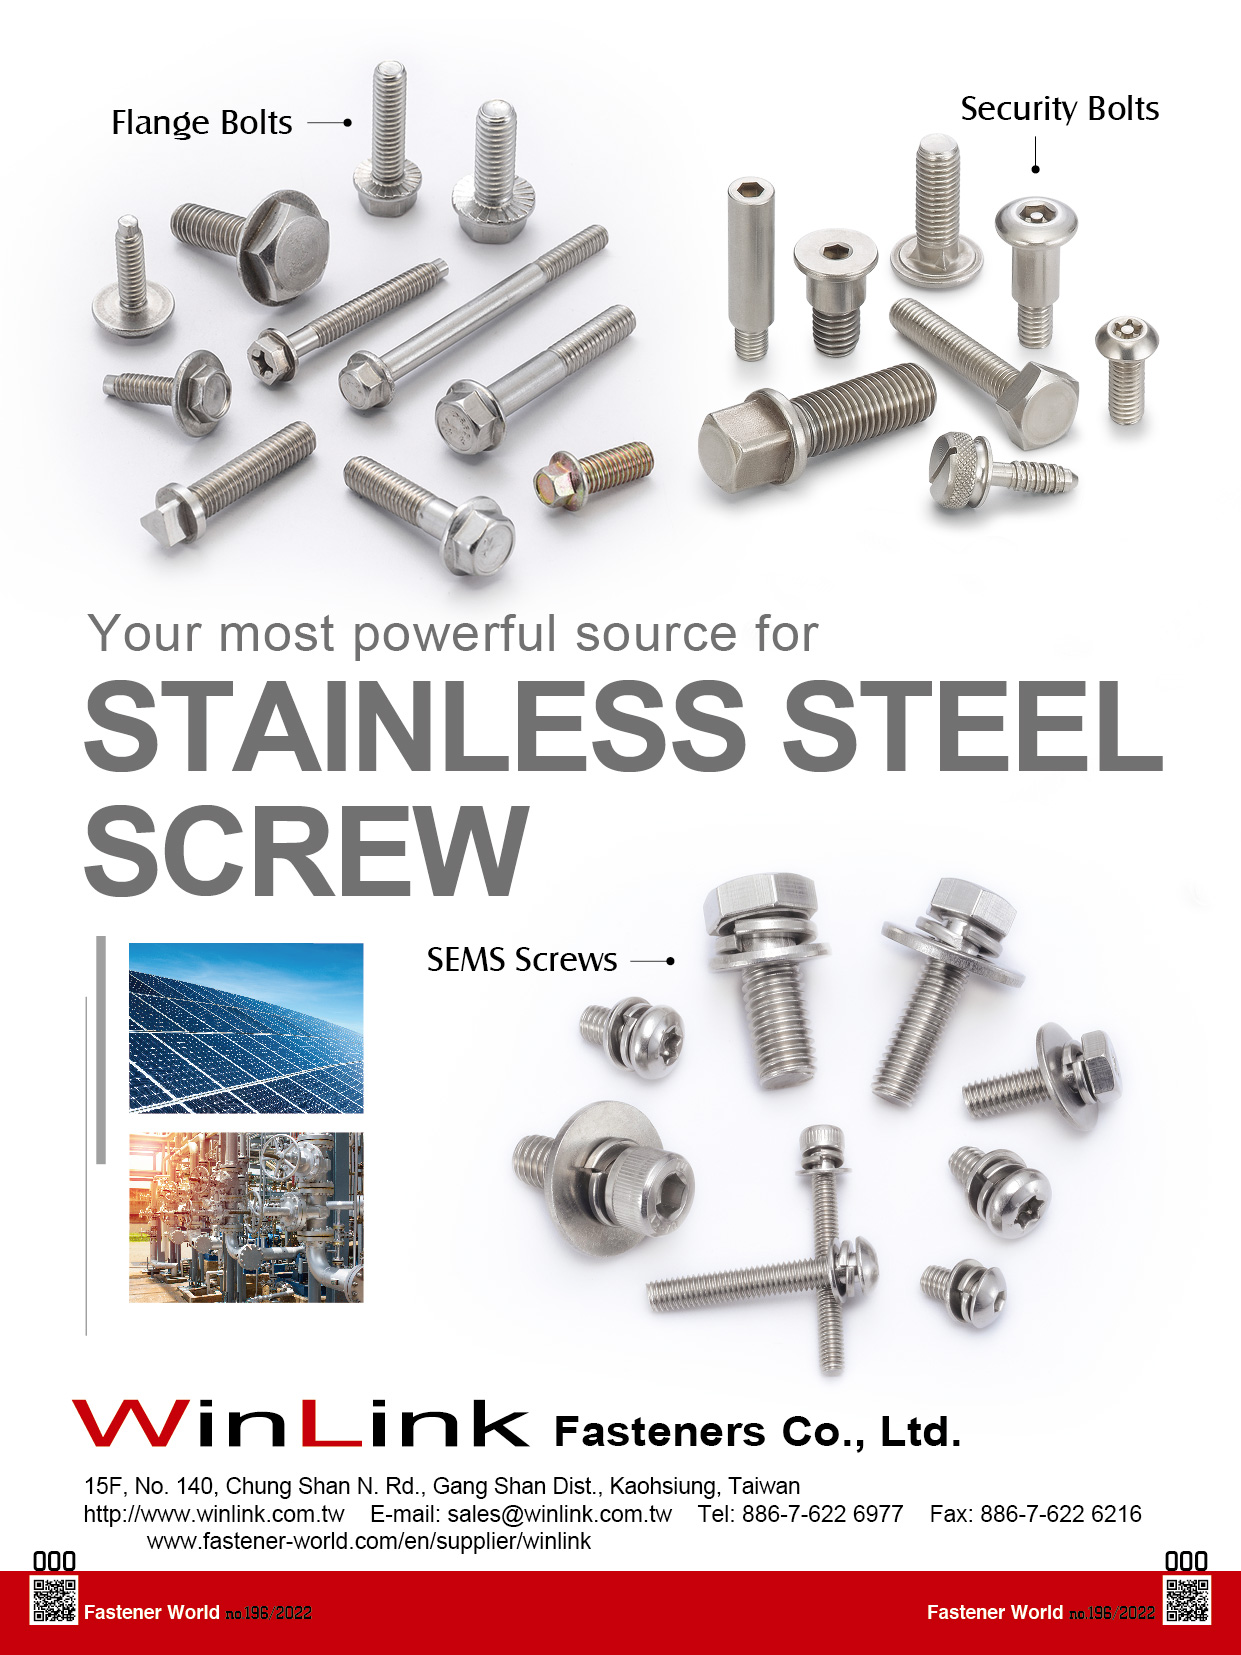 WINLINK FASTENERS CO., LTD.  , Flange Bolts, Security Bolt, Stainless Steel Screw, SEMS Screws